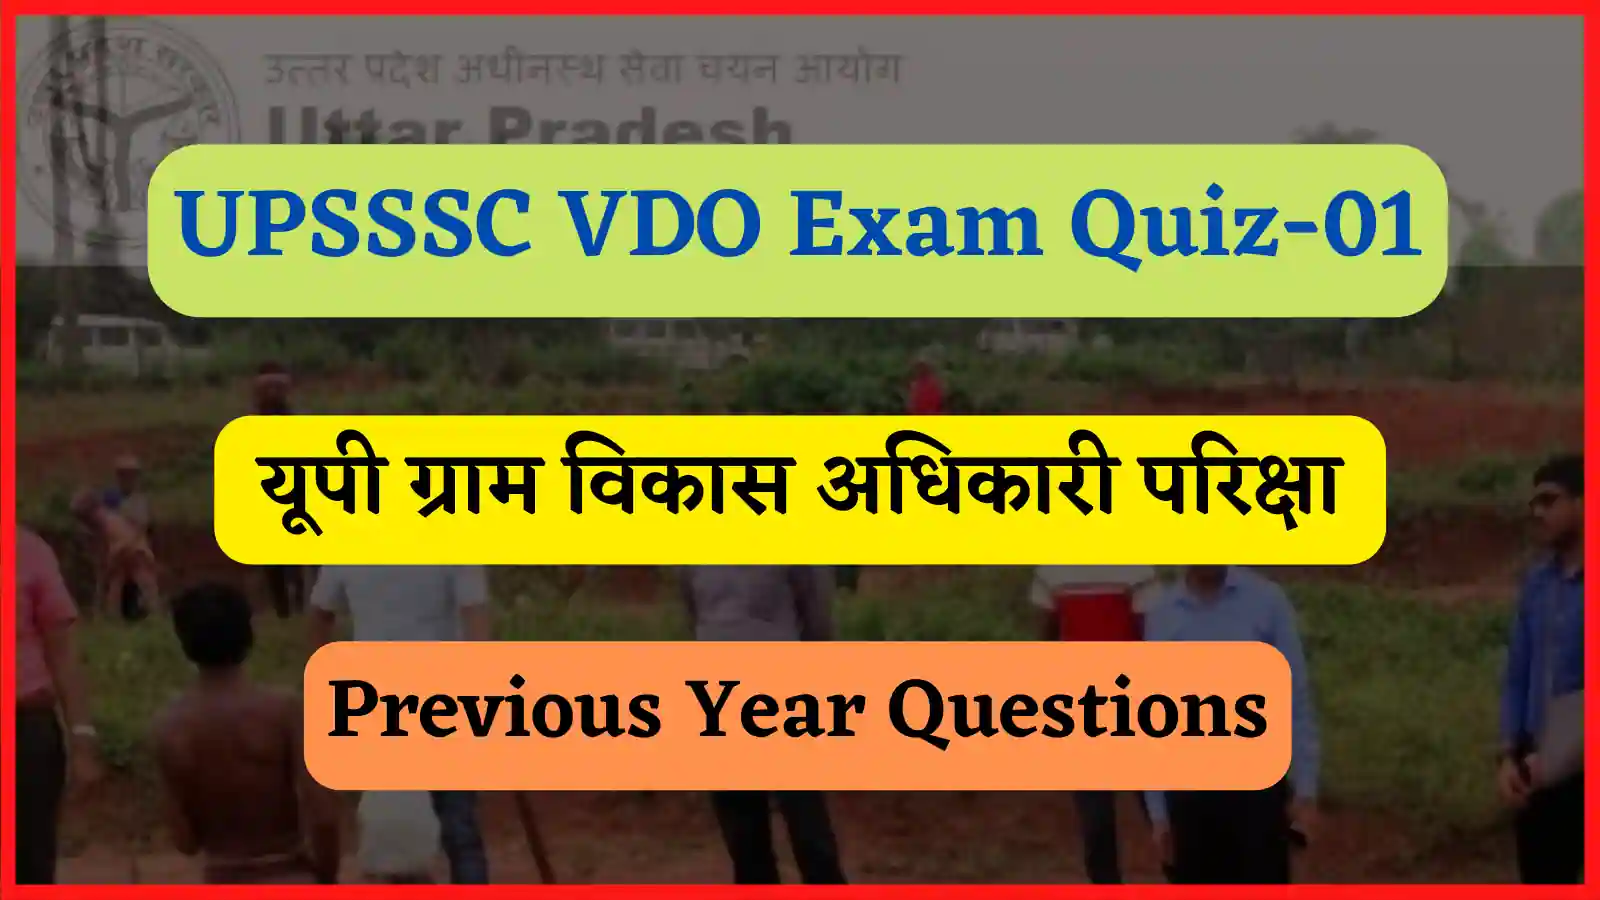 UPSSSC VDO exam quiz-01